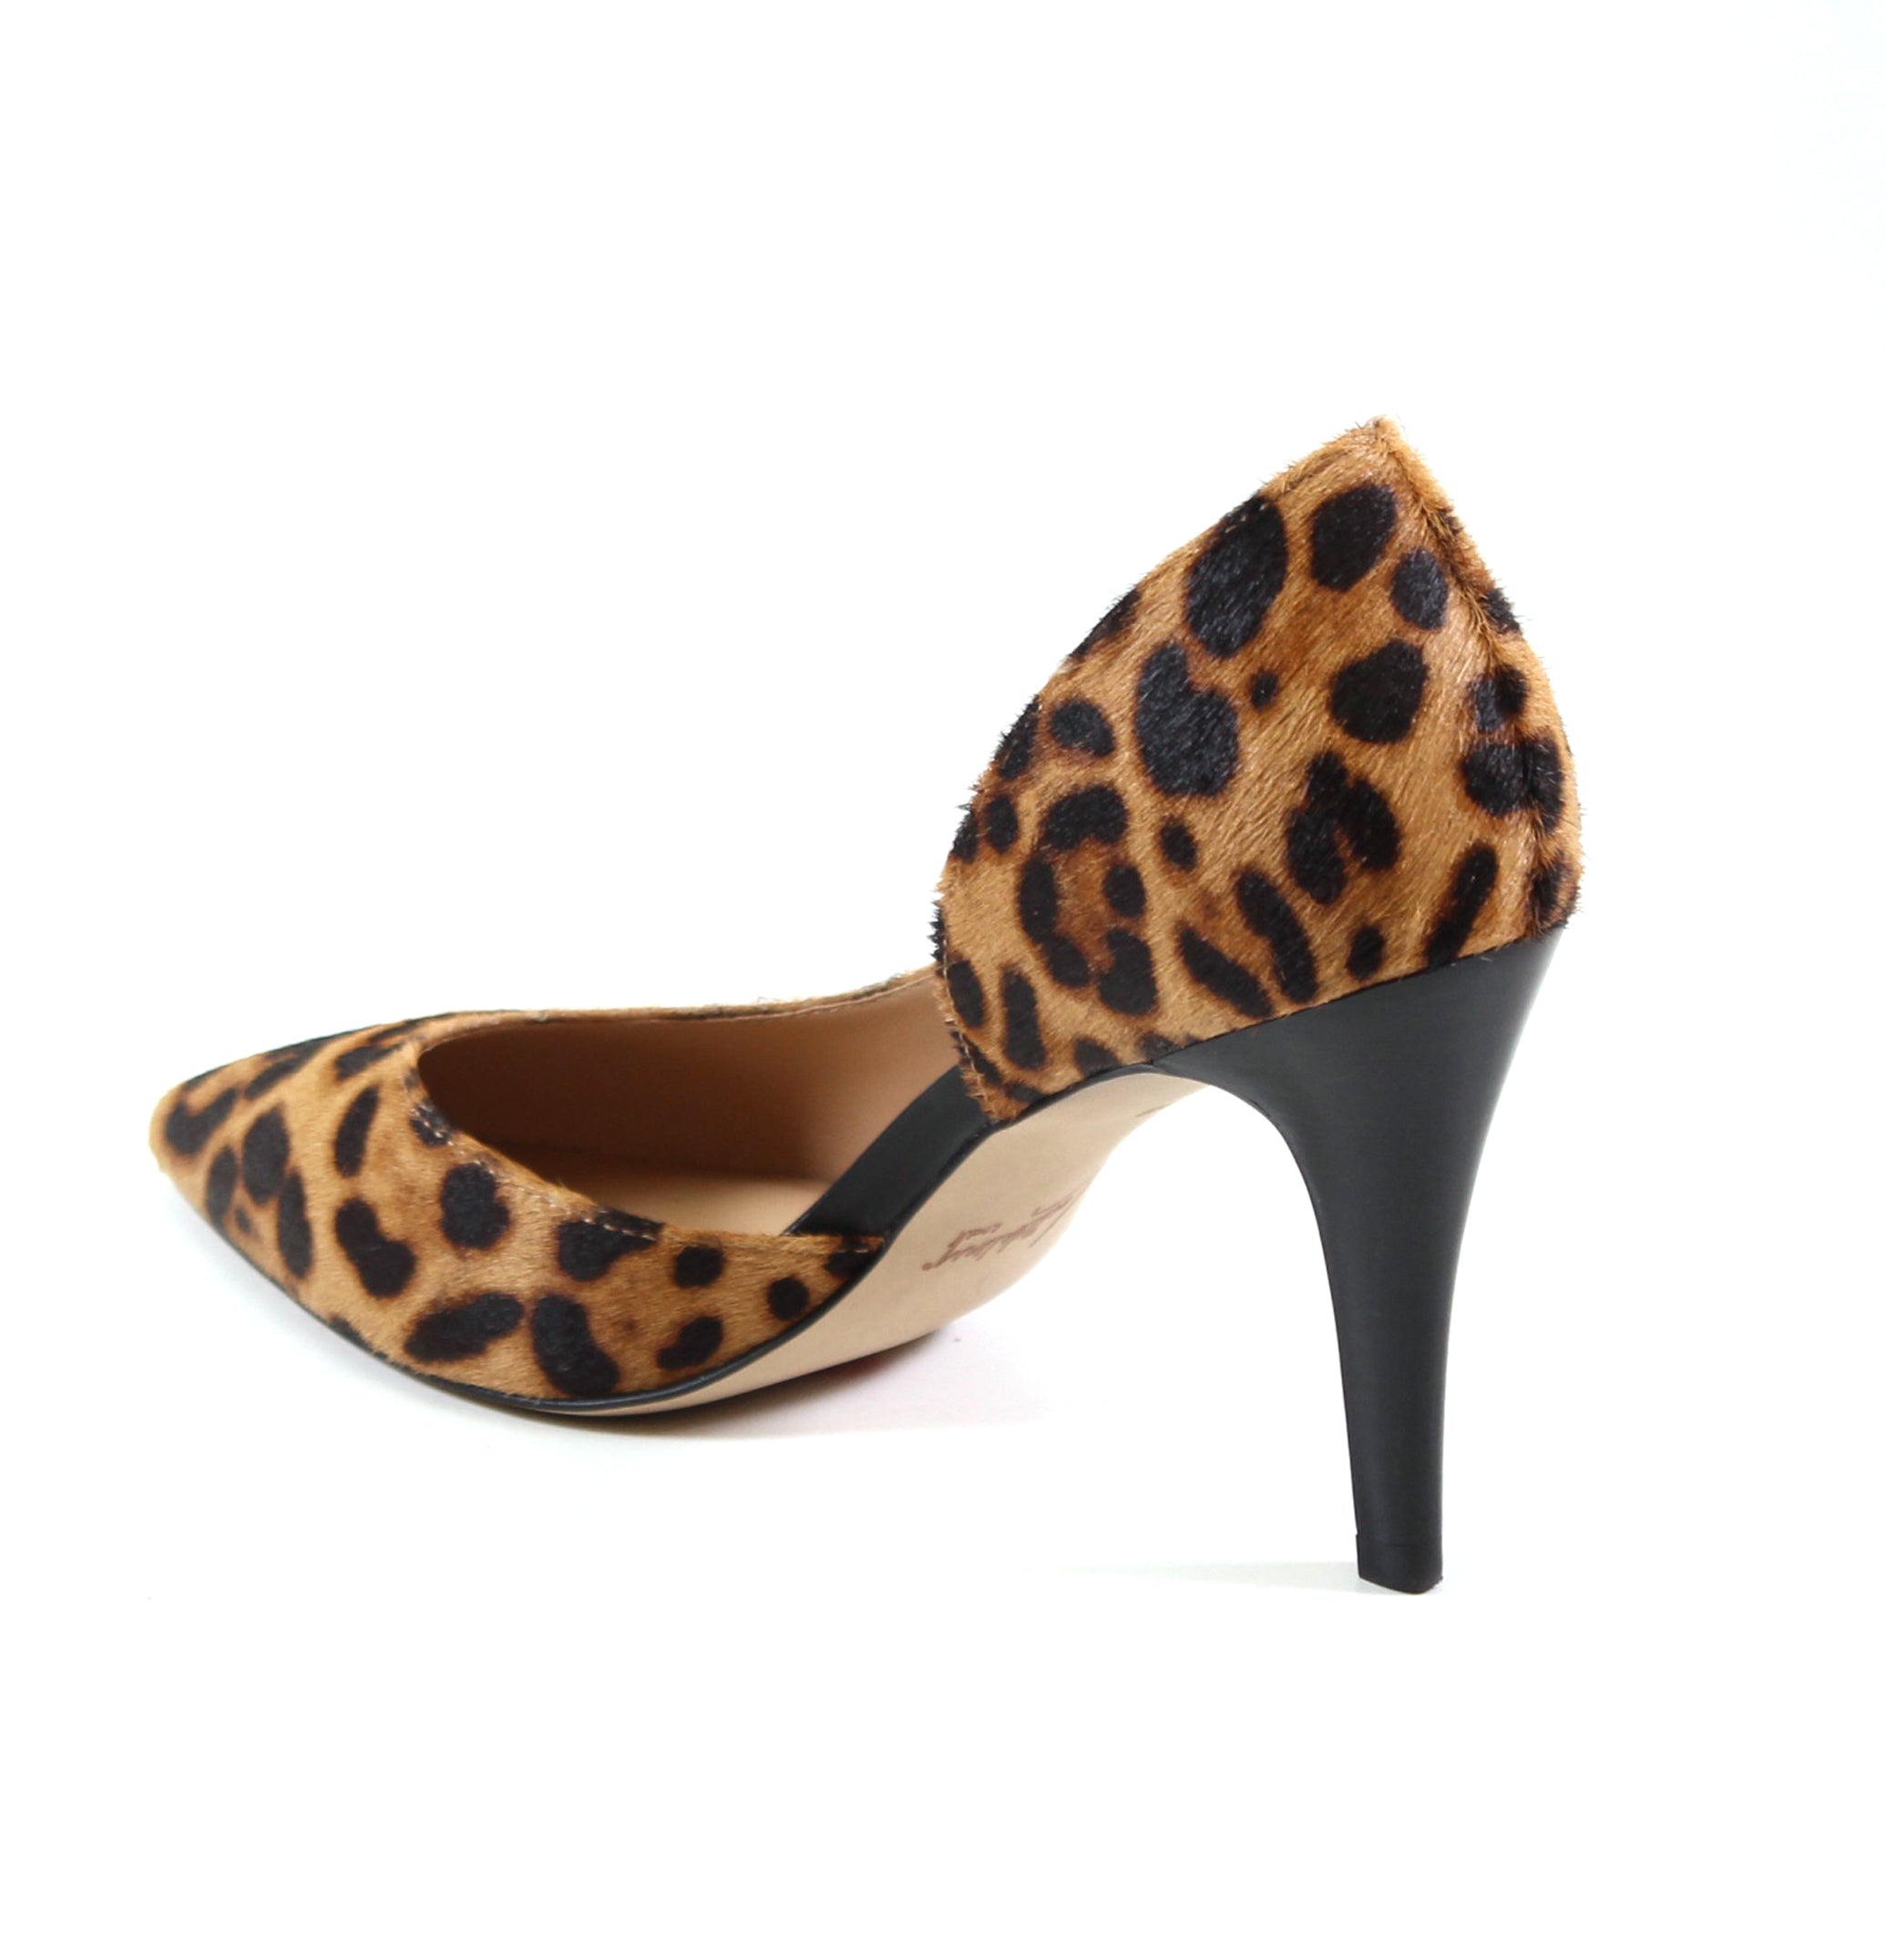  Luichiny LTD GOR GEOUS in Leopard - Diba Shoes